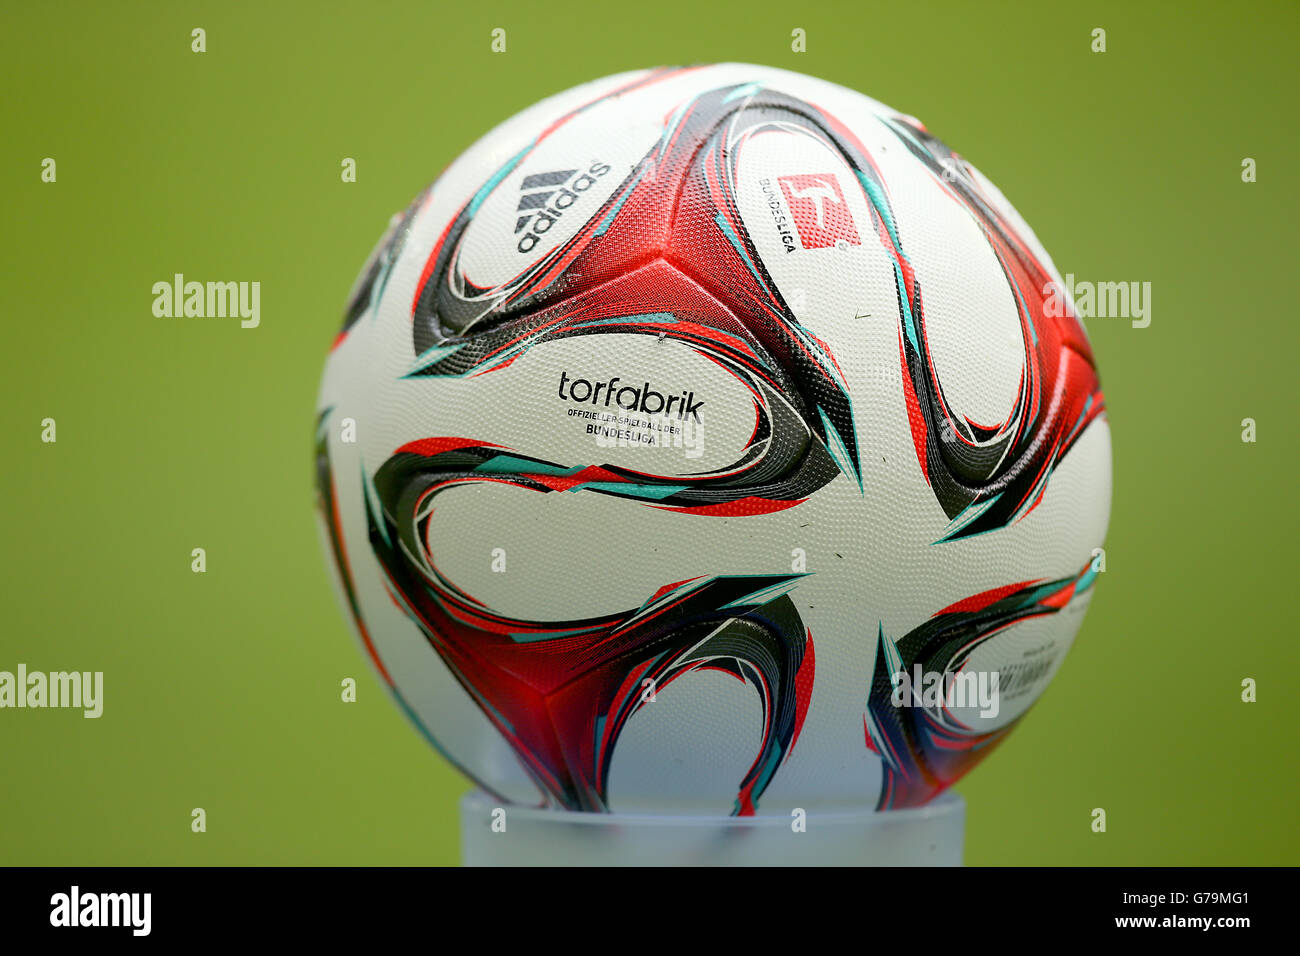 Soccer ball adidas torfabrik hi-res stock photography and images - Alamy